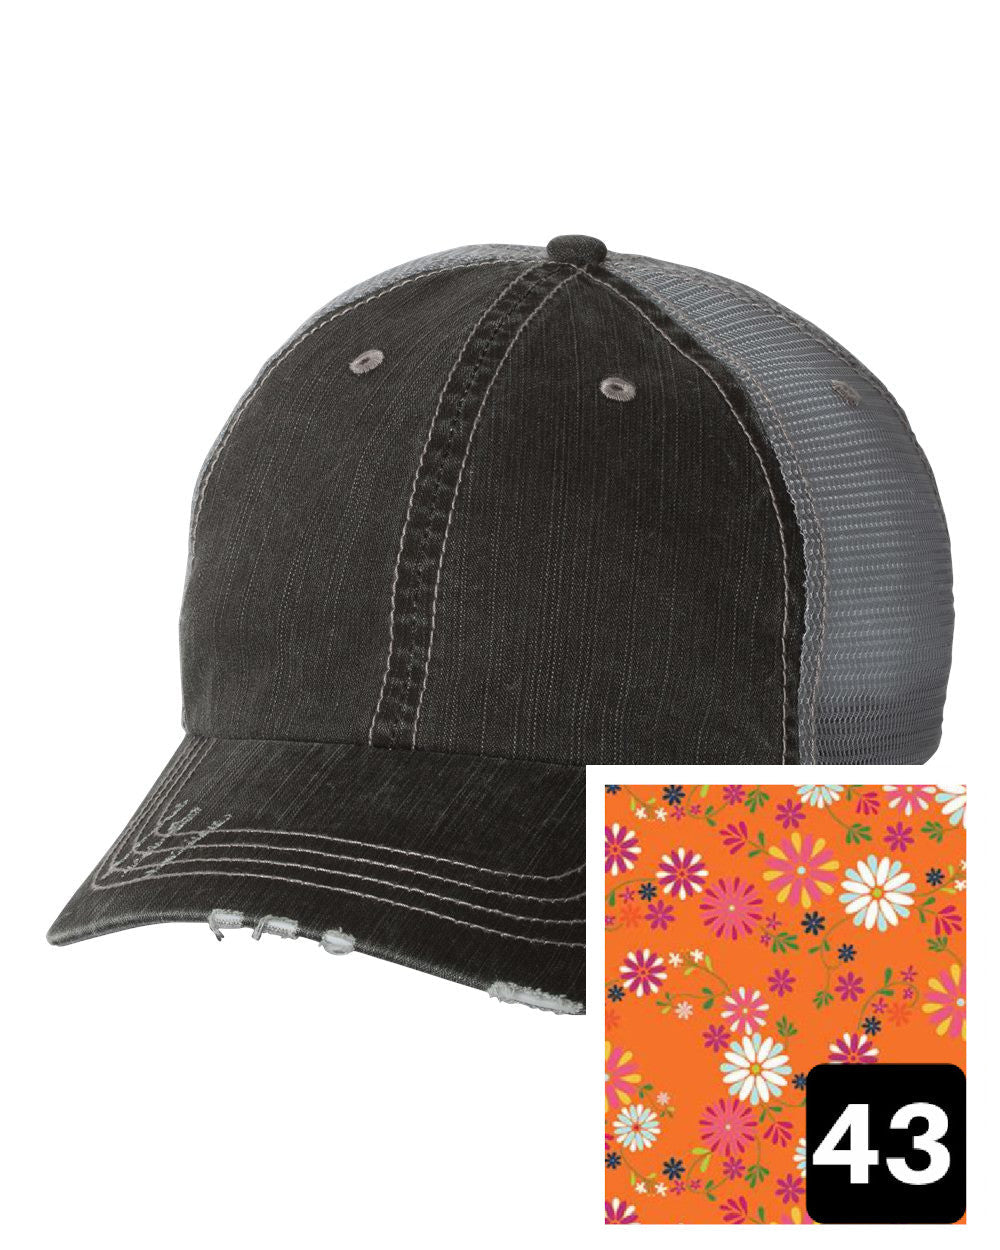 gray distressed trucker hat with black geometric fabric state of Arizona